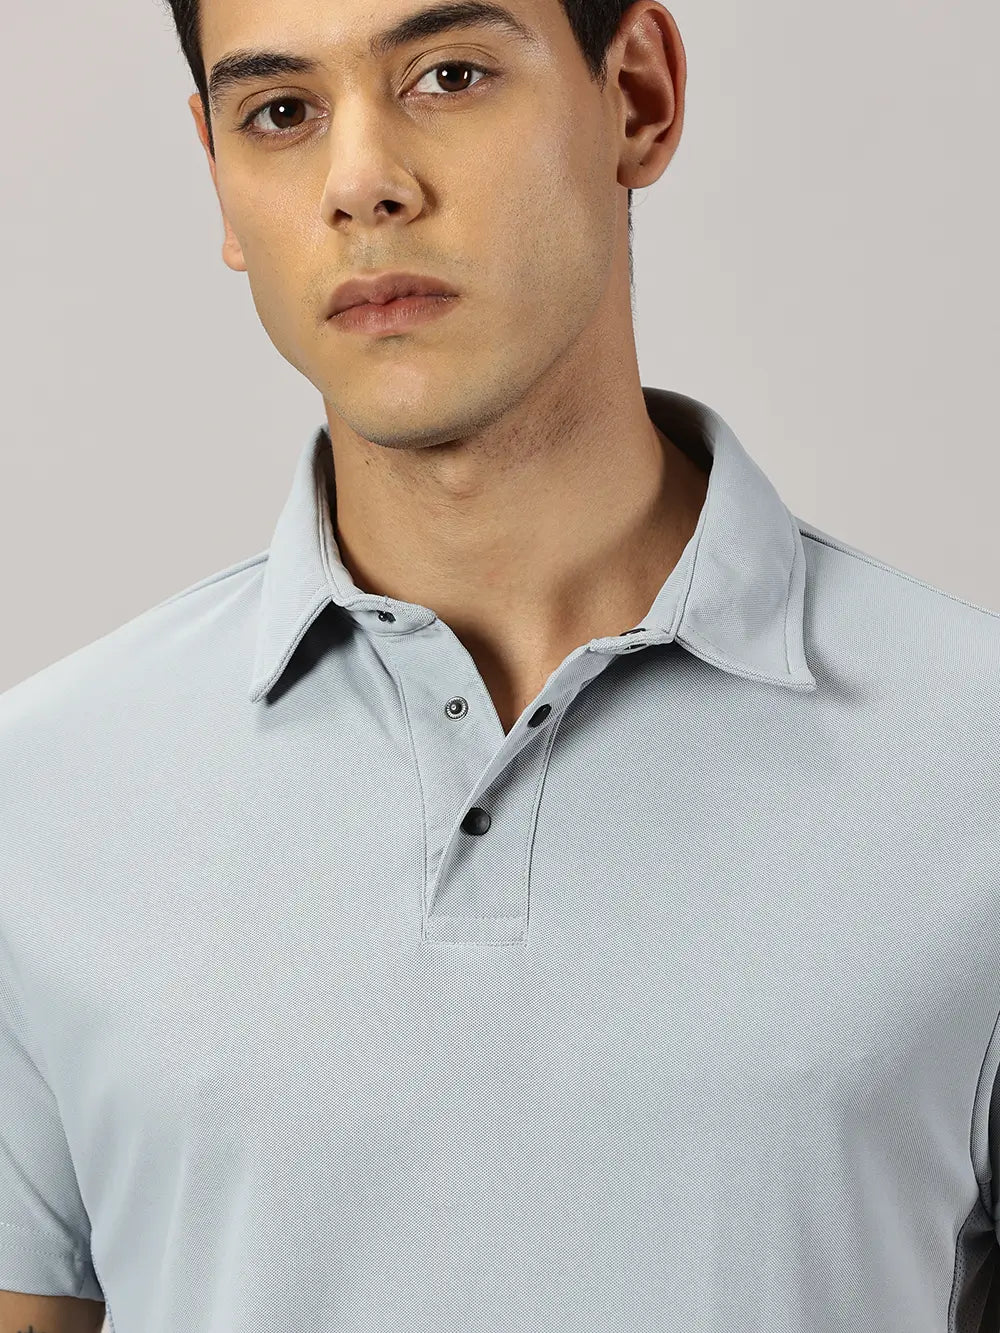 A model wearing Blue Tyga columbia blue odor-free polo t-shirt